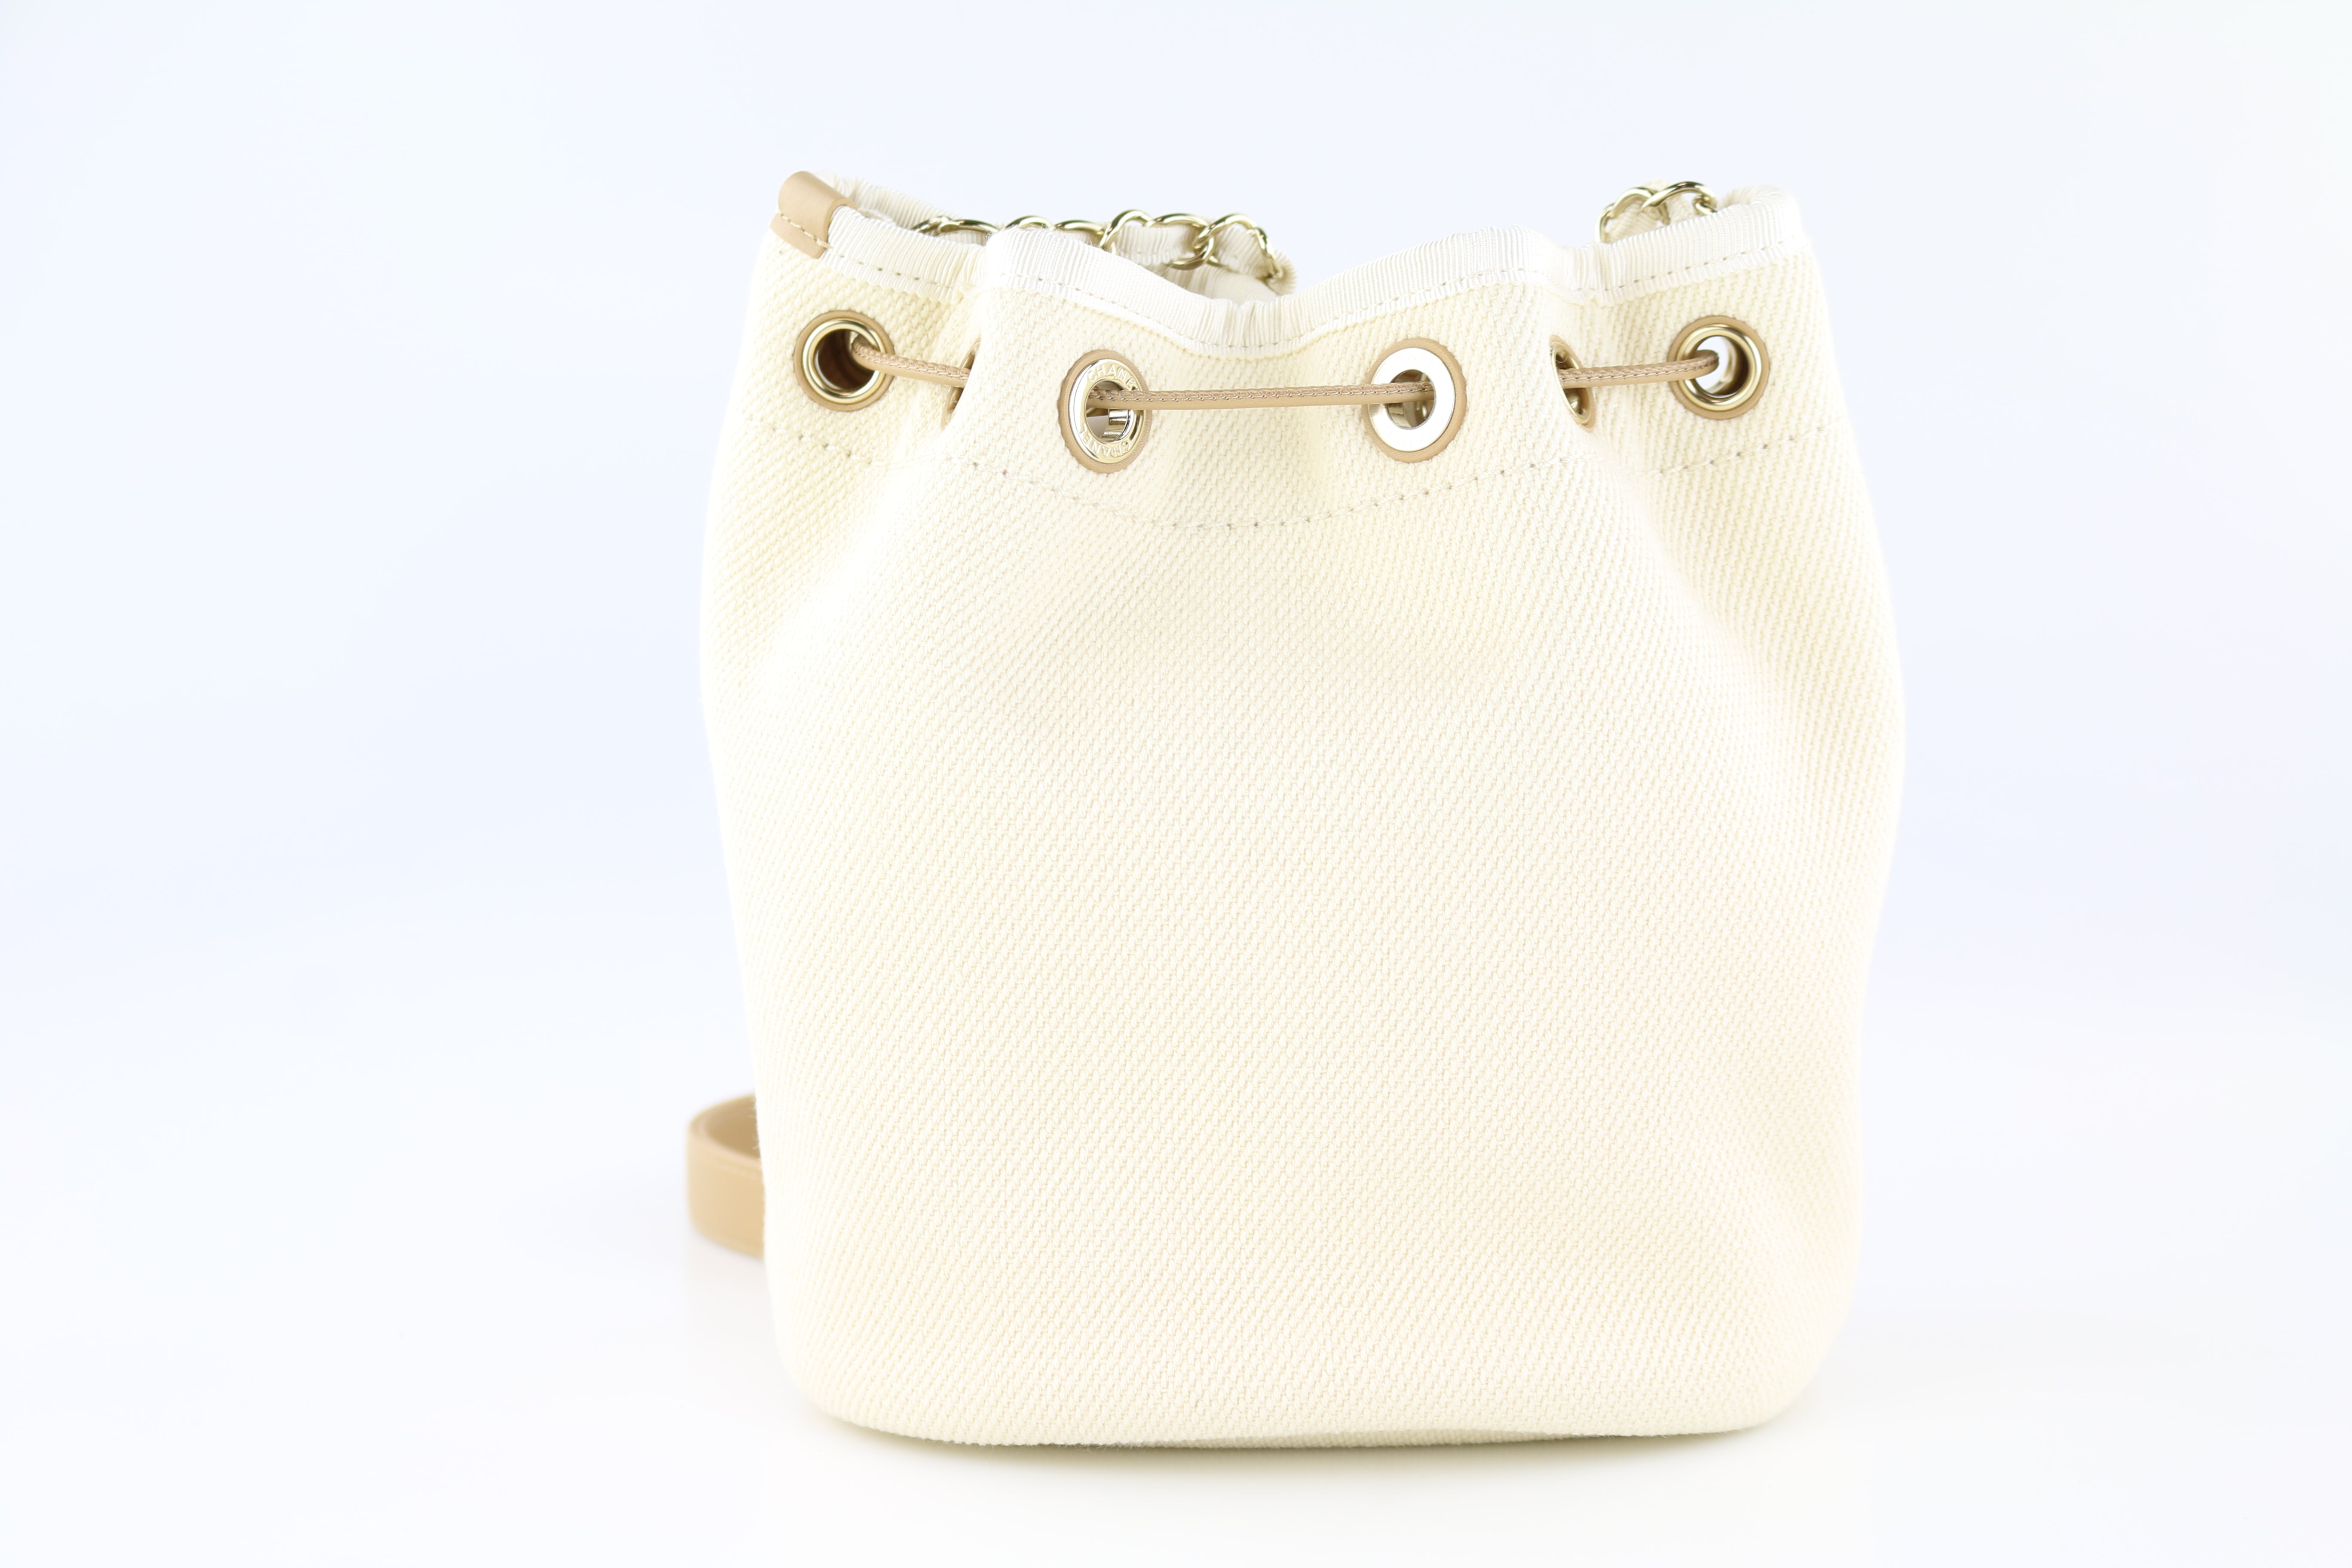 Chanel Velvet Pearl Crush Bucket Bag - Black Bucket Bags, Handbags -  CHA881627